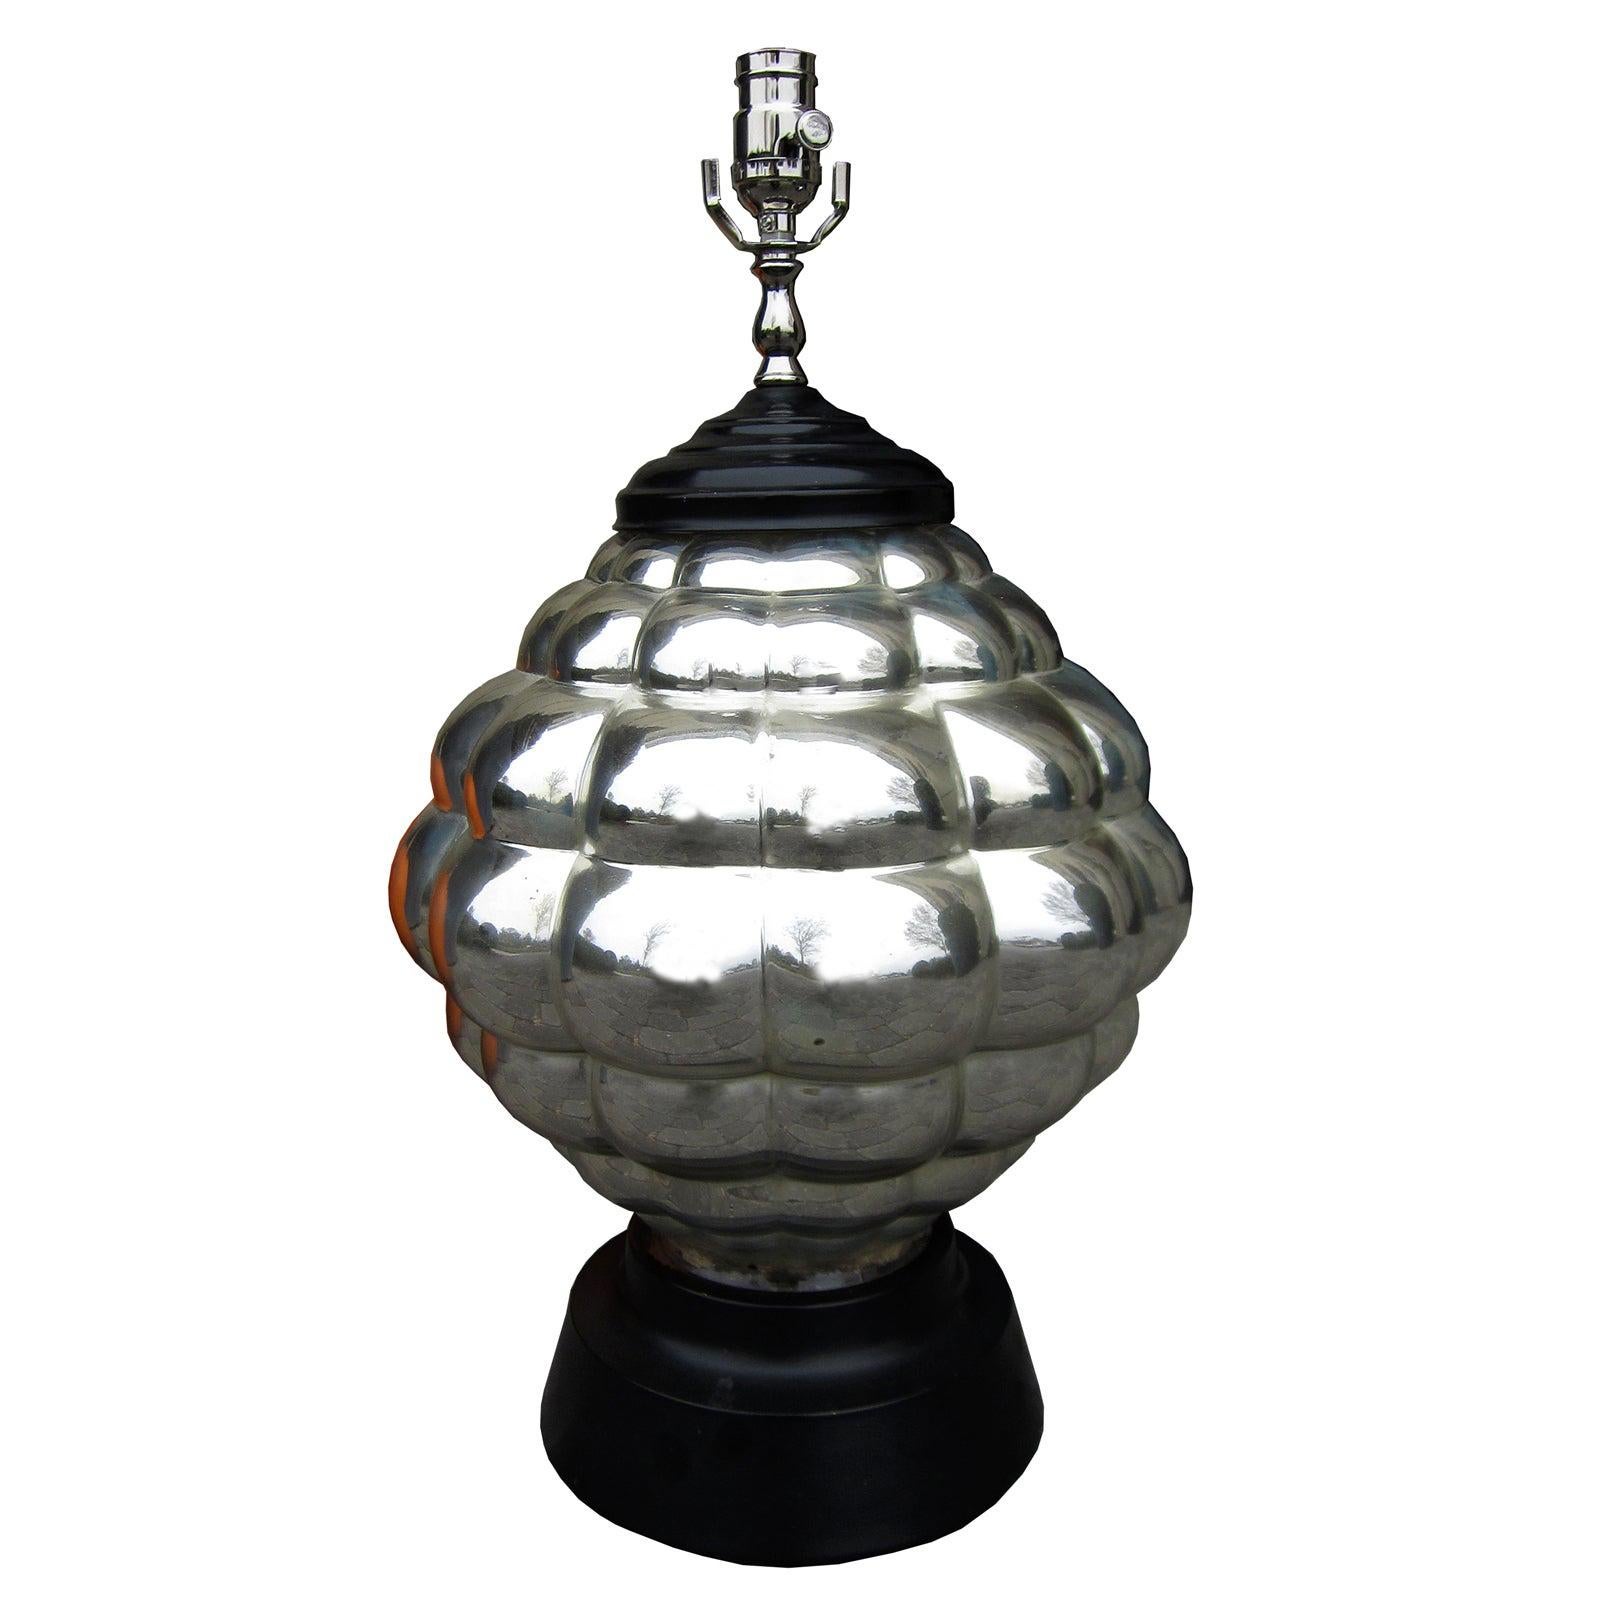 Mid-20th Century Mercury Glass Lamp on Black Base